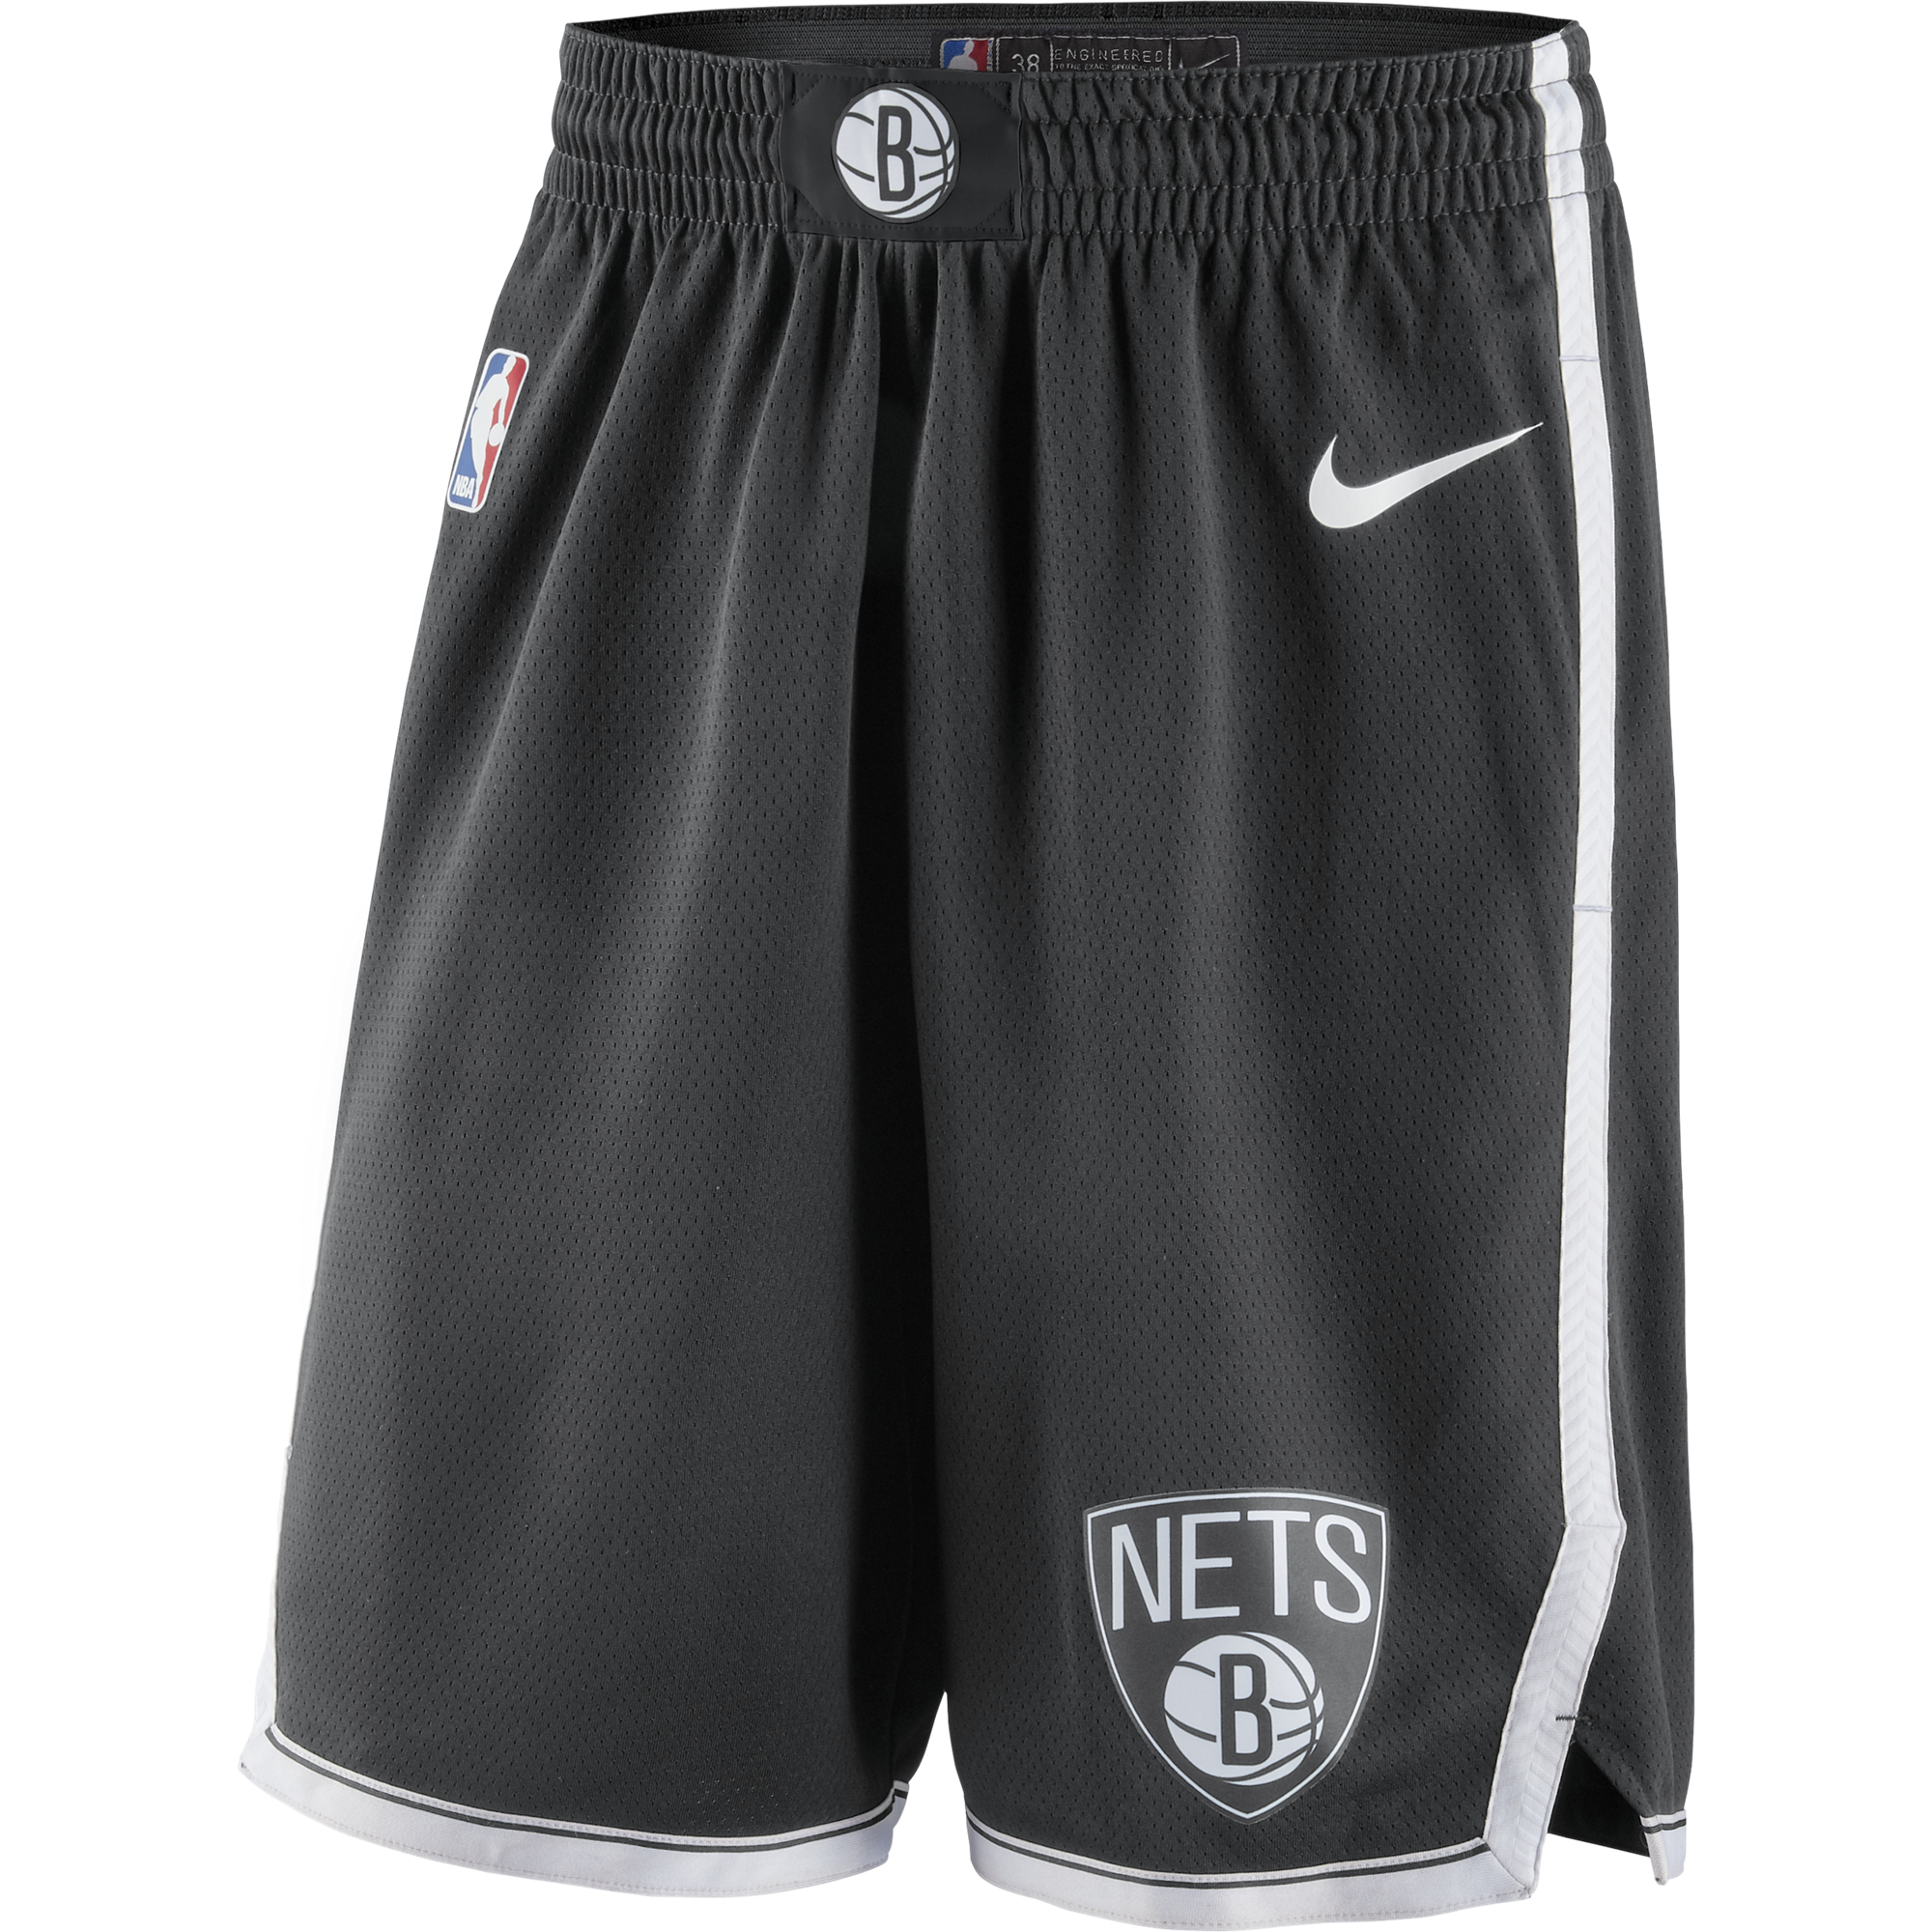 Nike NBA Brooklyn Nets Showtime Basketball Pants - Black/White